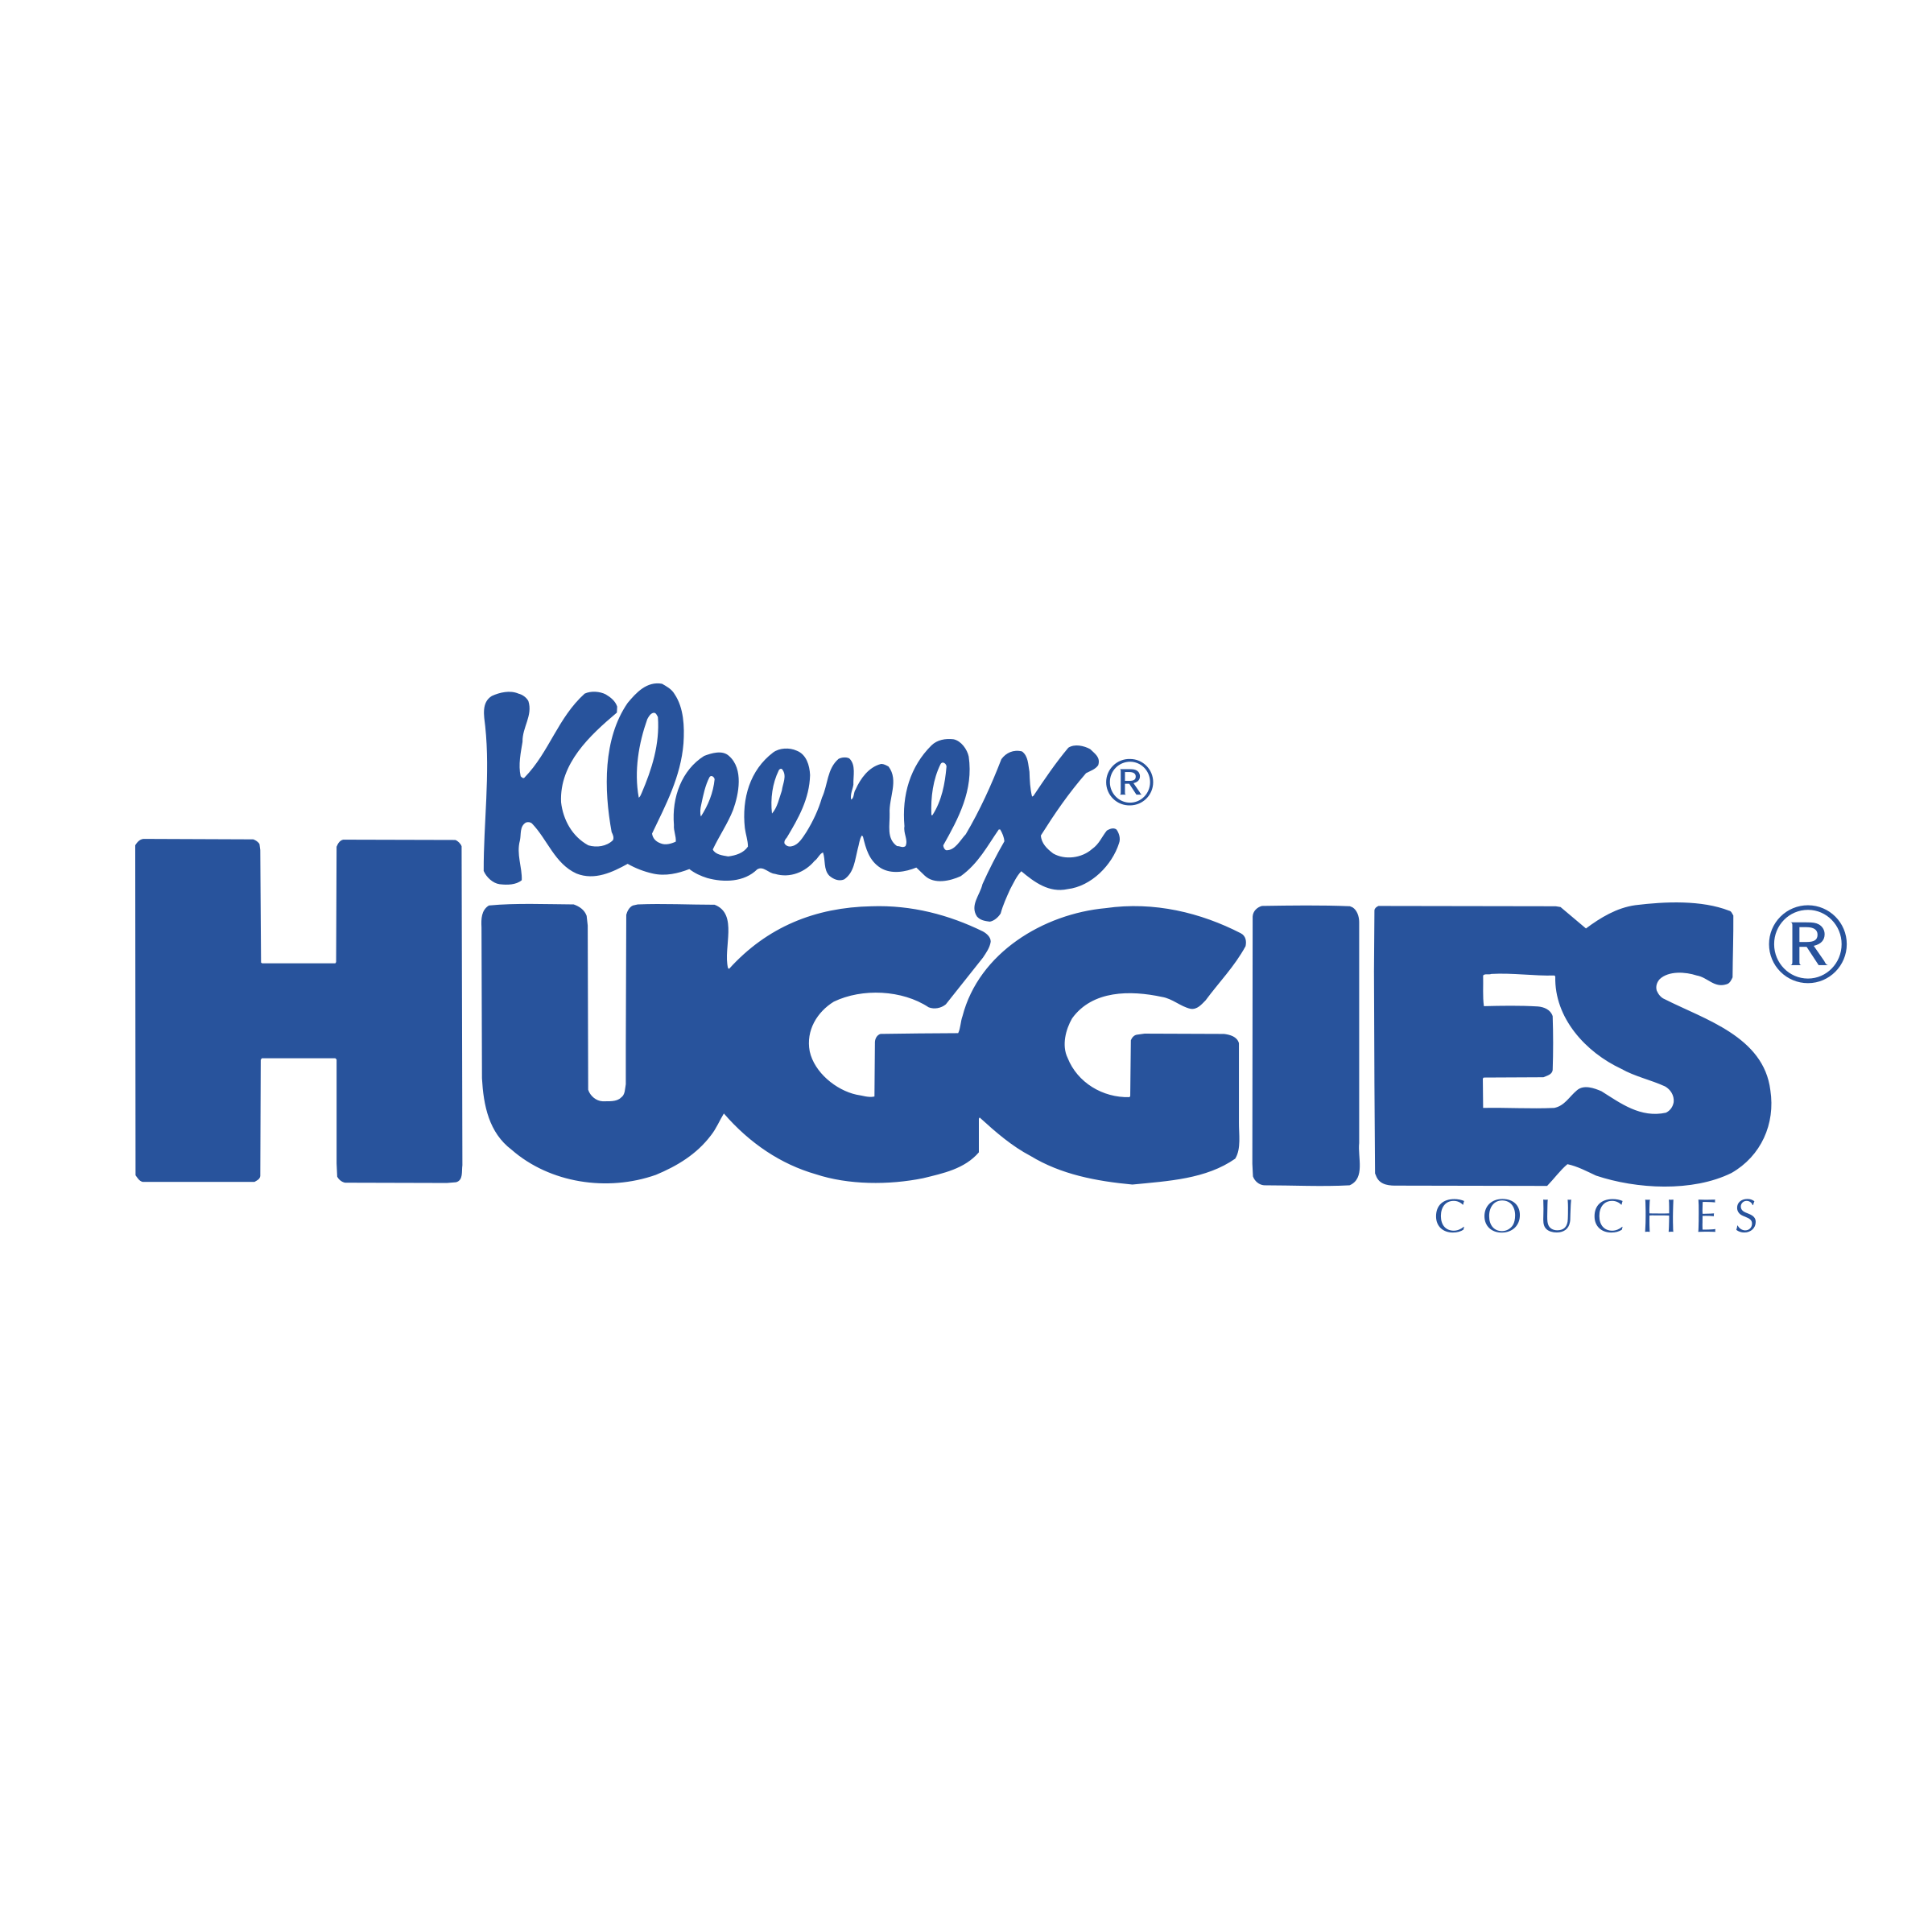 Huggies Logo - Huggies Logo PNG Transparent & SVG Vector - Freebie Supply